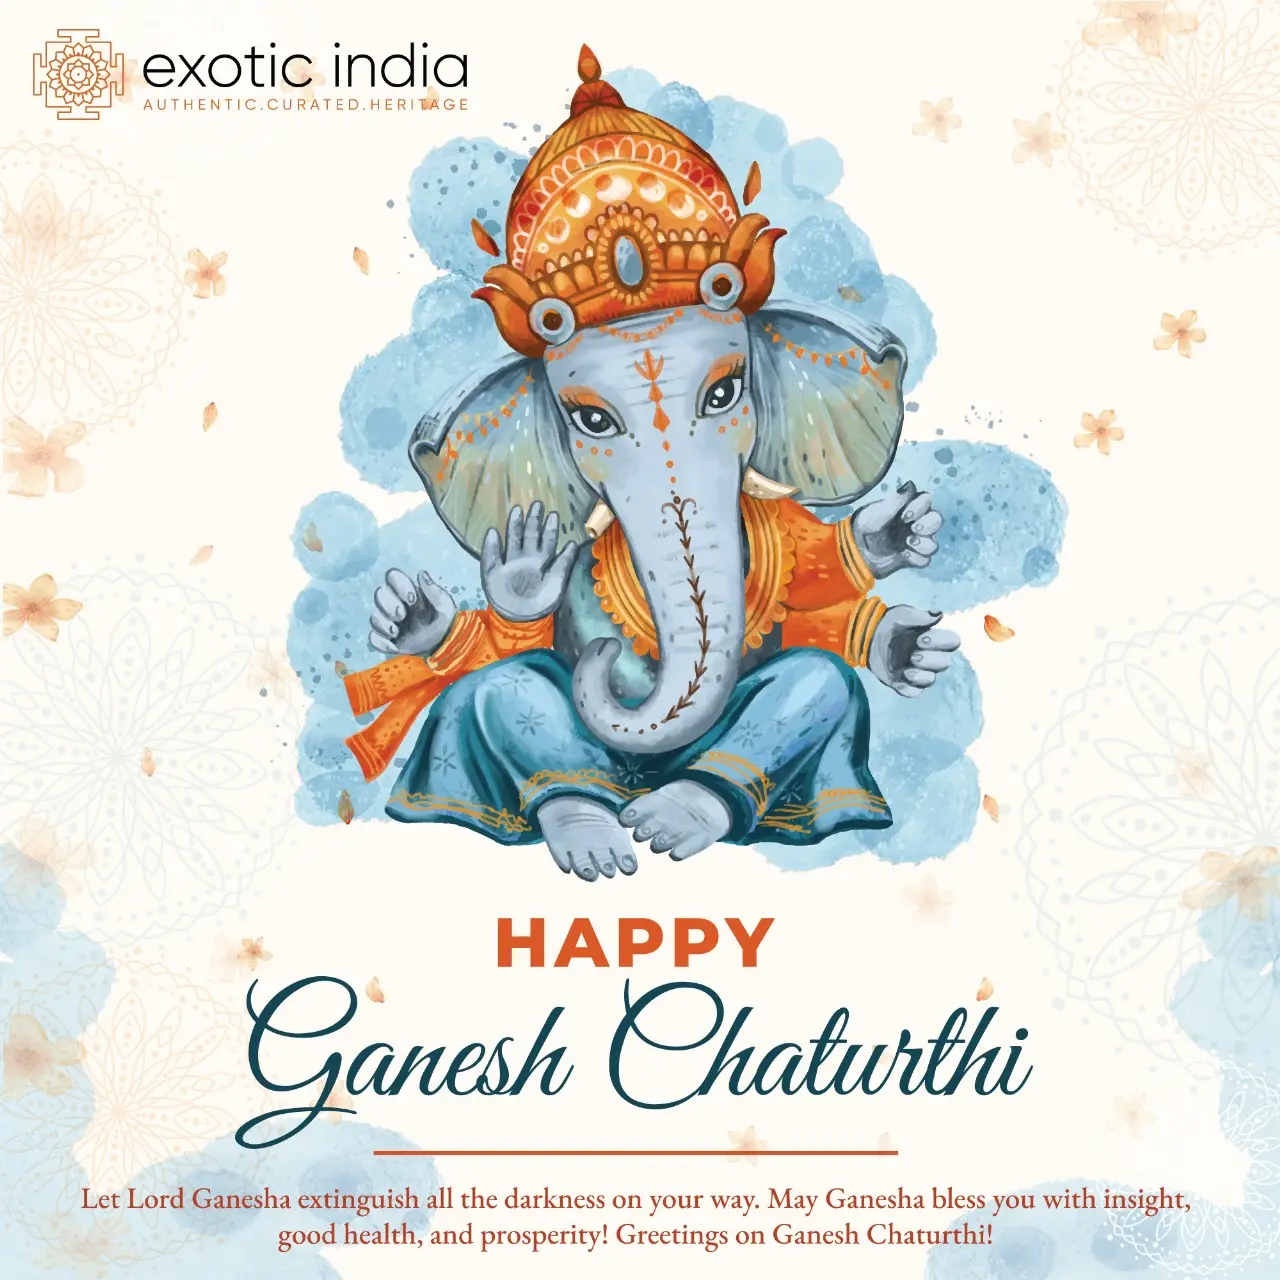 Welcoming Auspiciousness: The Festival of Ganesha Chaturthi